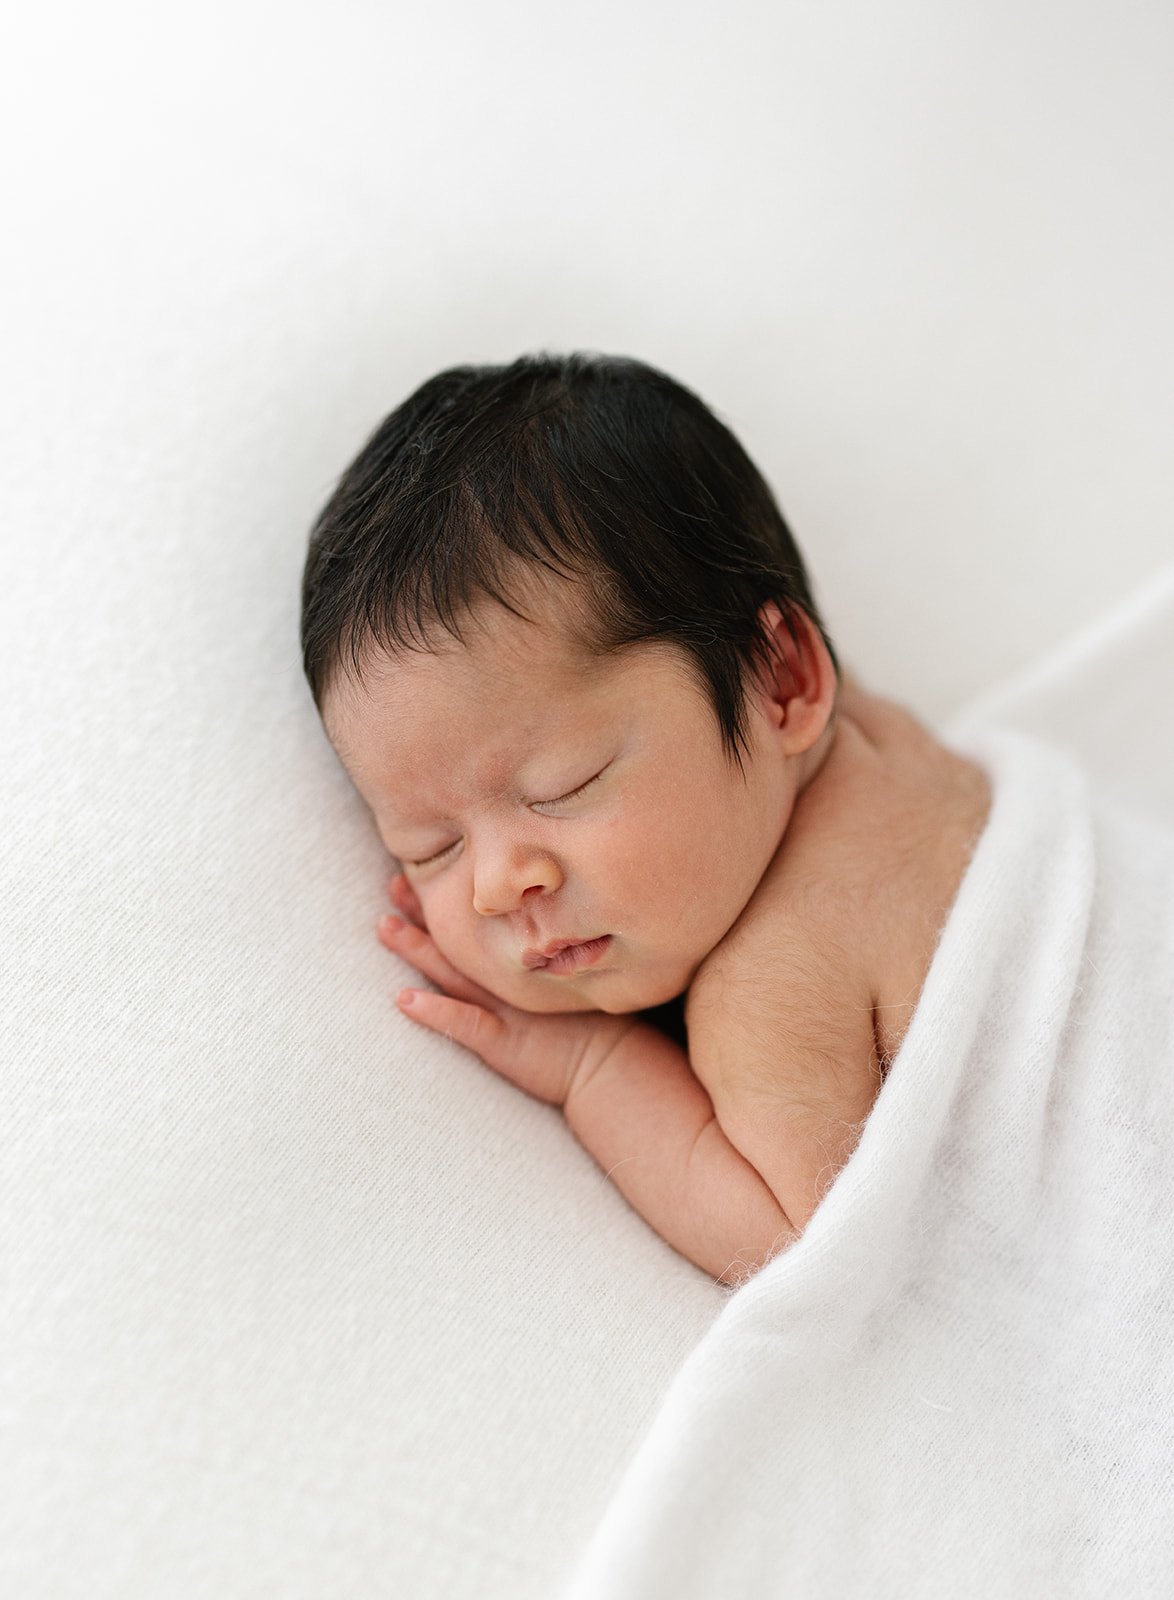 newborn baby with dark hair wrapped in white blanket